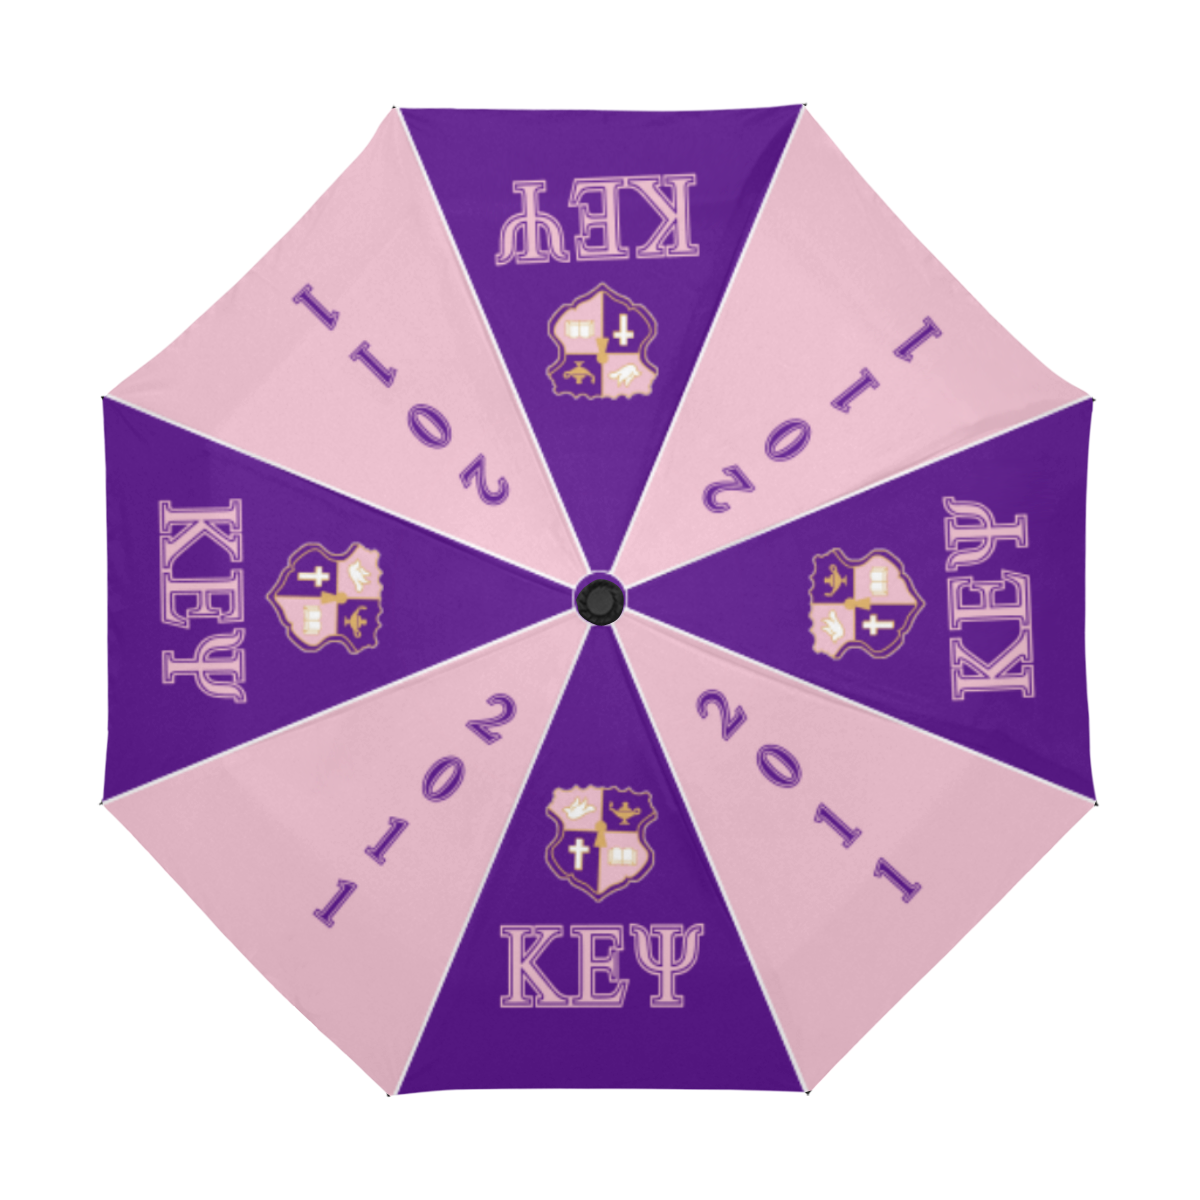 Purple and pink umbrella with key emblem.